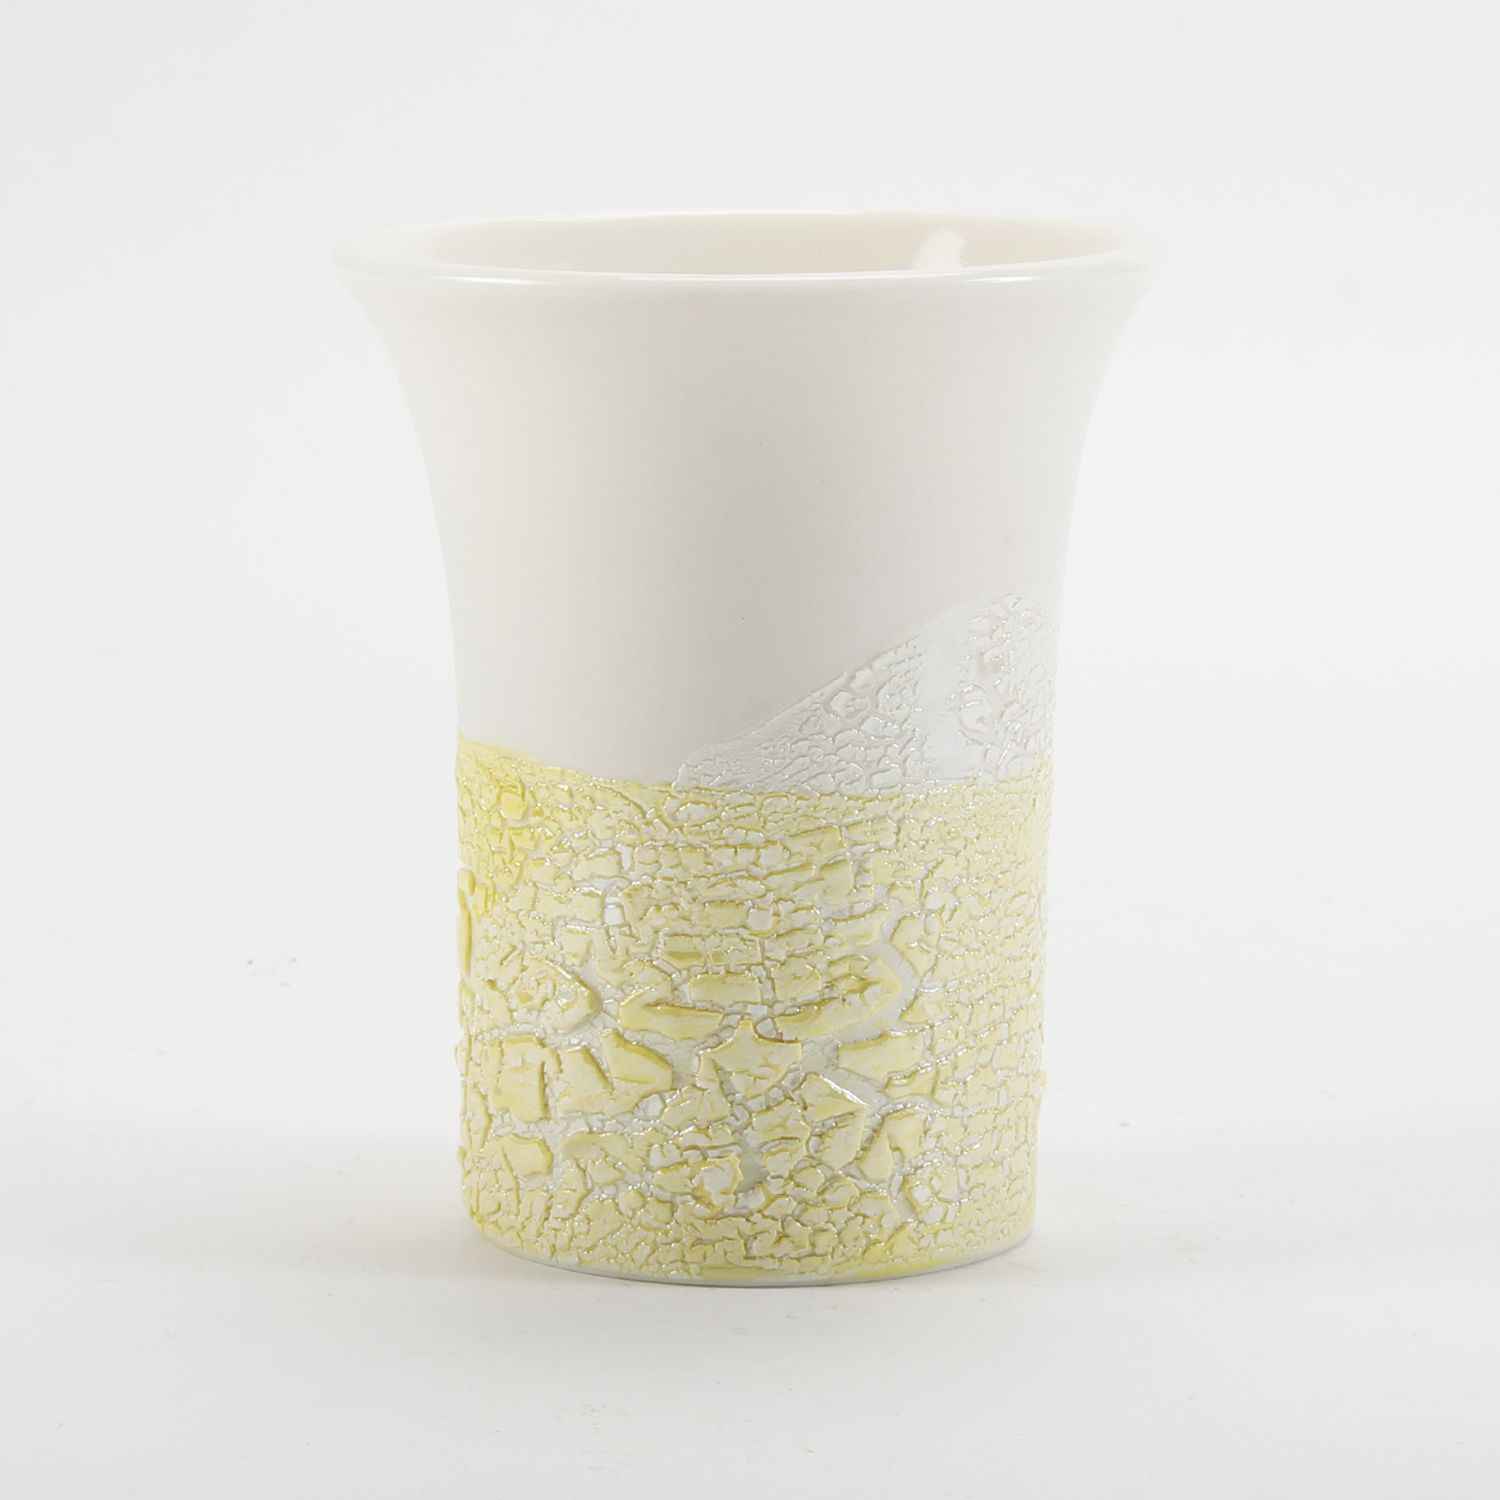 Cuir Ceramics: Cup/Vase Product Image 3 of 4